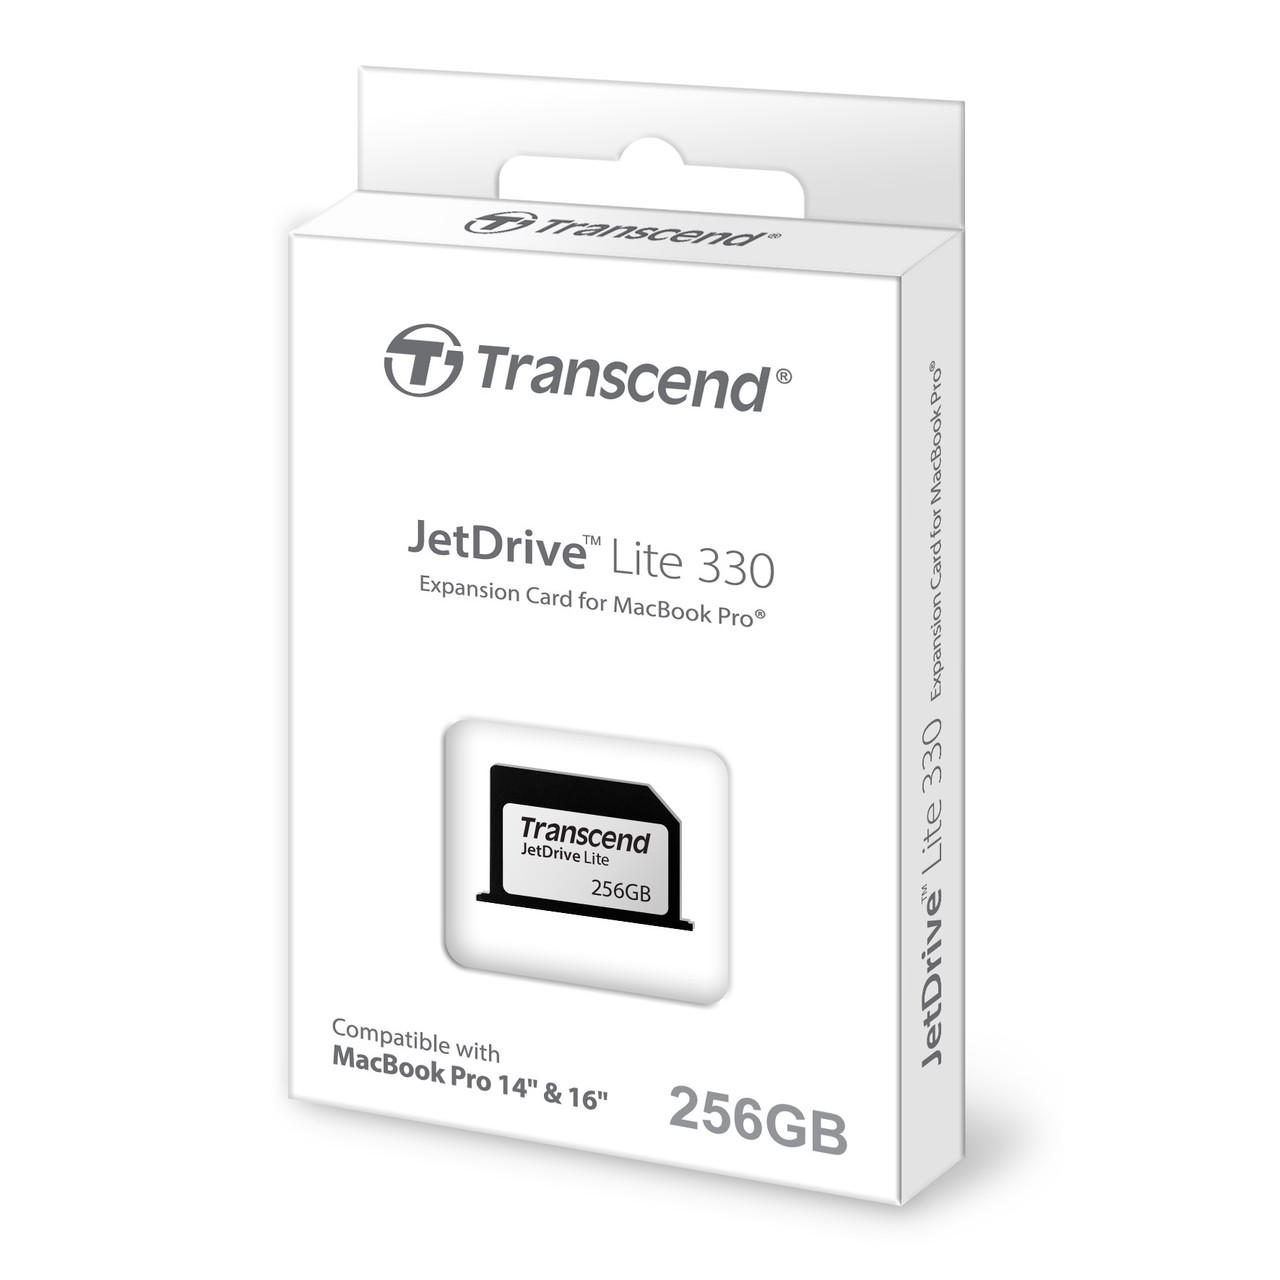 Transcend Jetdrive Lite 330 256GB memory card_package